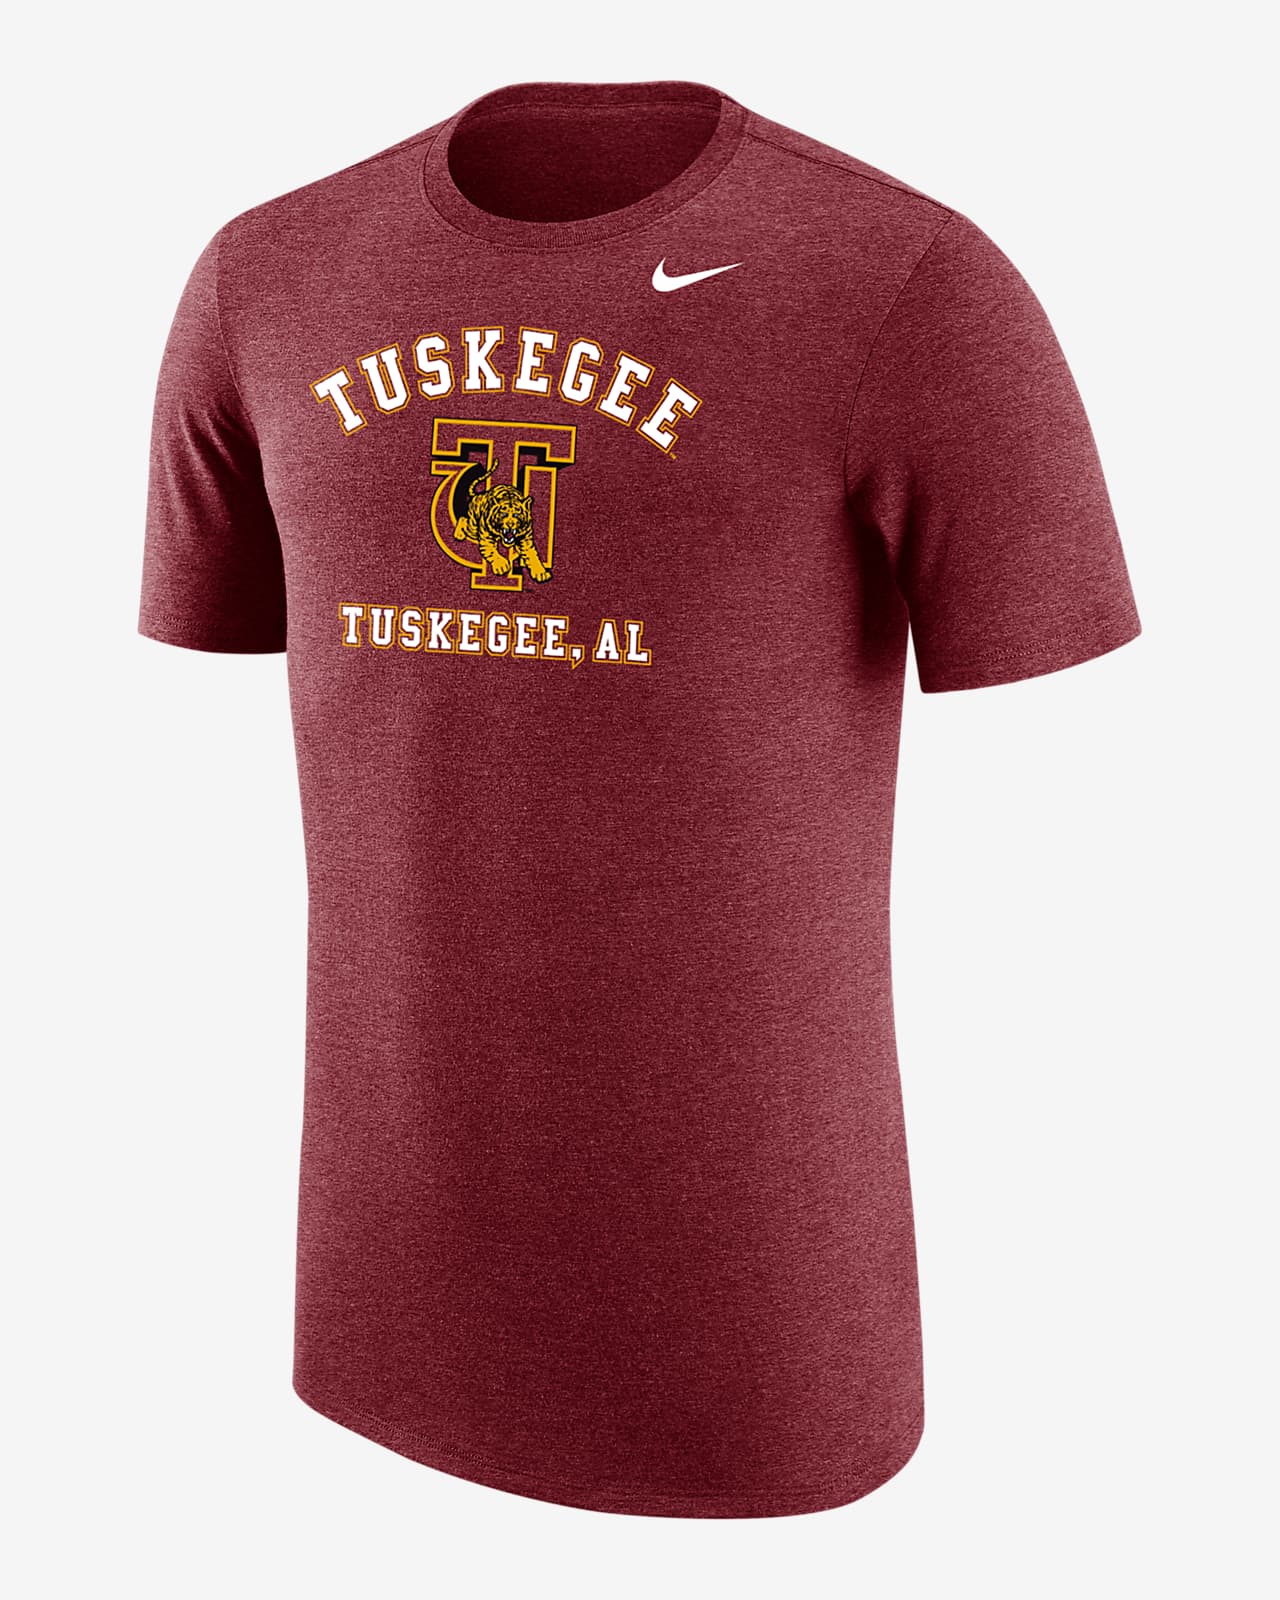 Playera Nike College para hombre Tuskegee